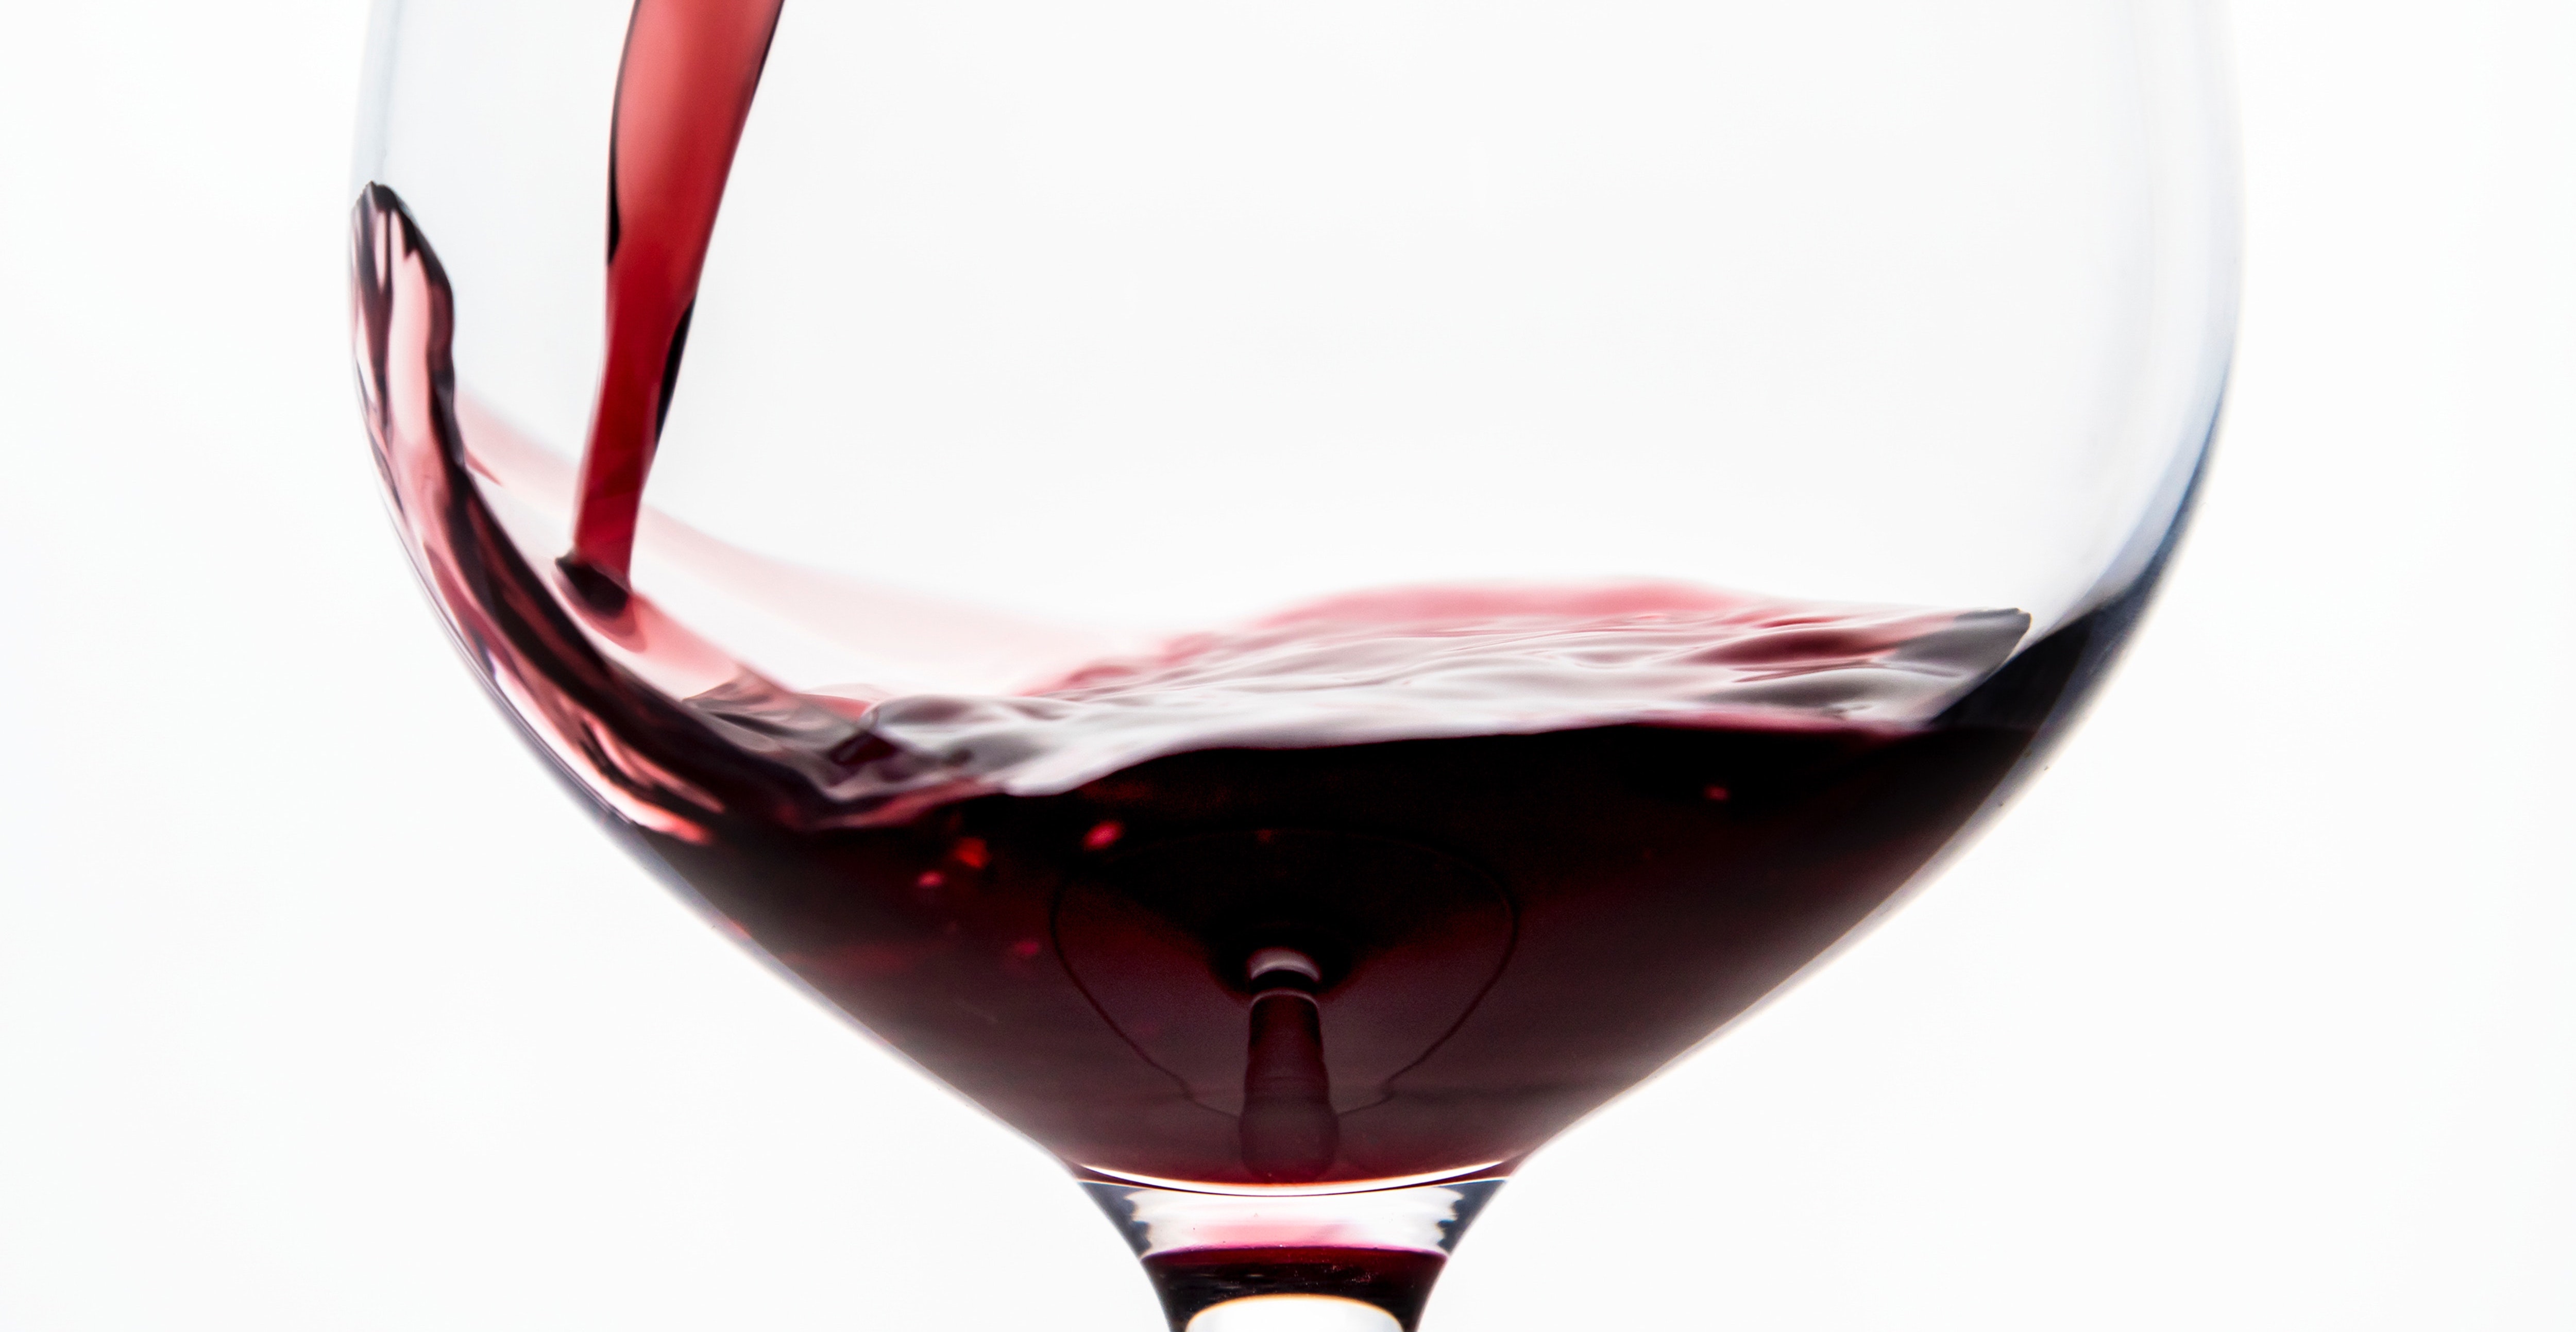 Wine glass close-up